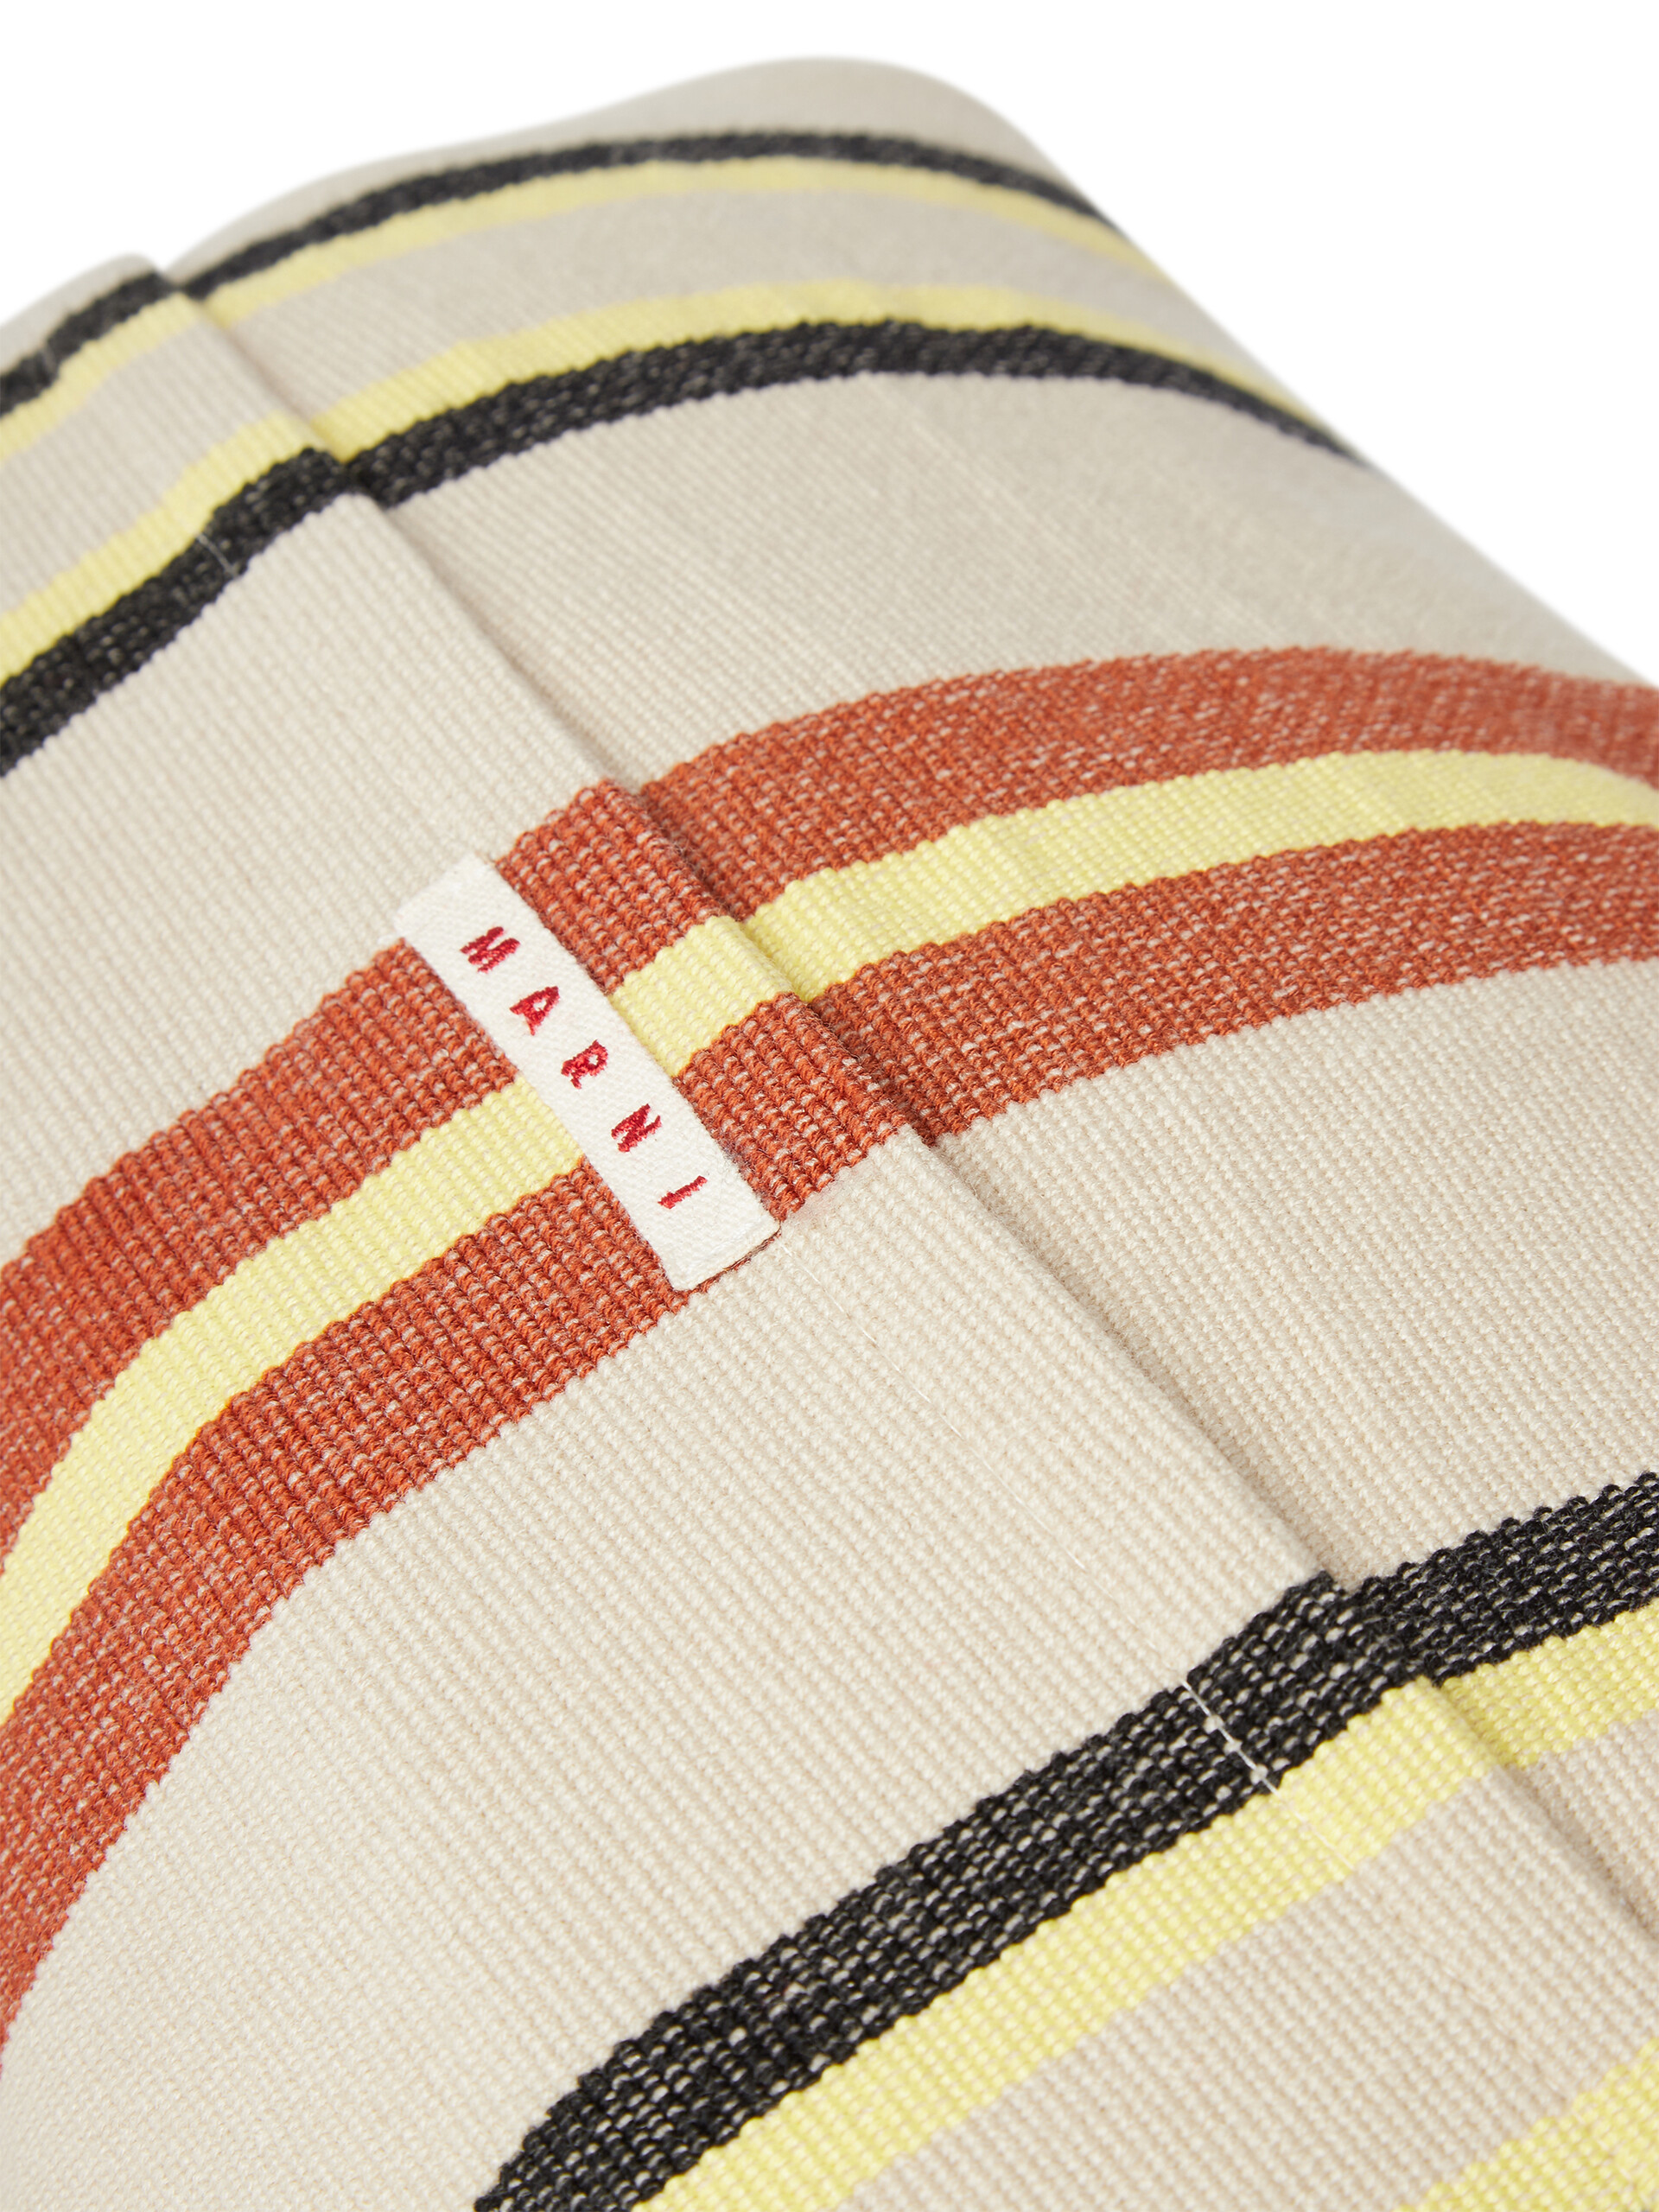 MARNI MARKET cushion in multicolor beige fabric - Furniture - Image 3